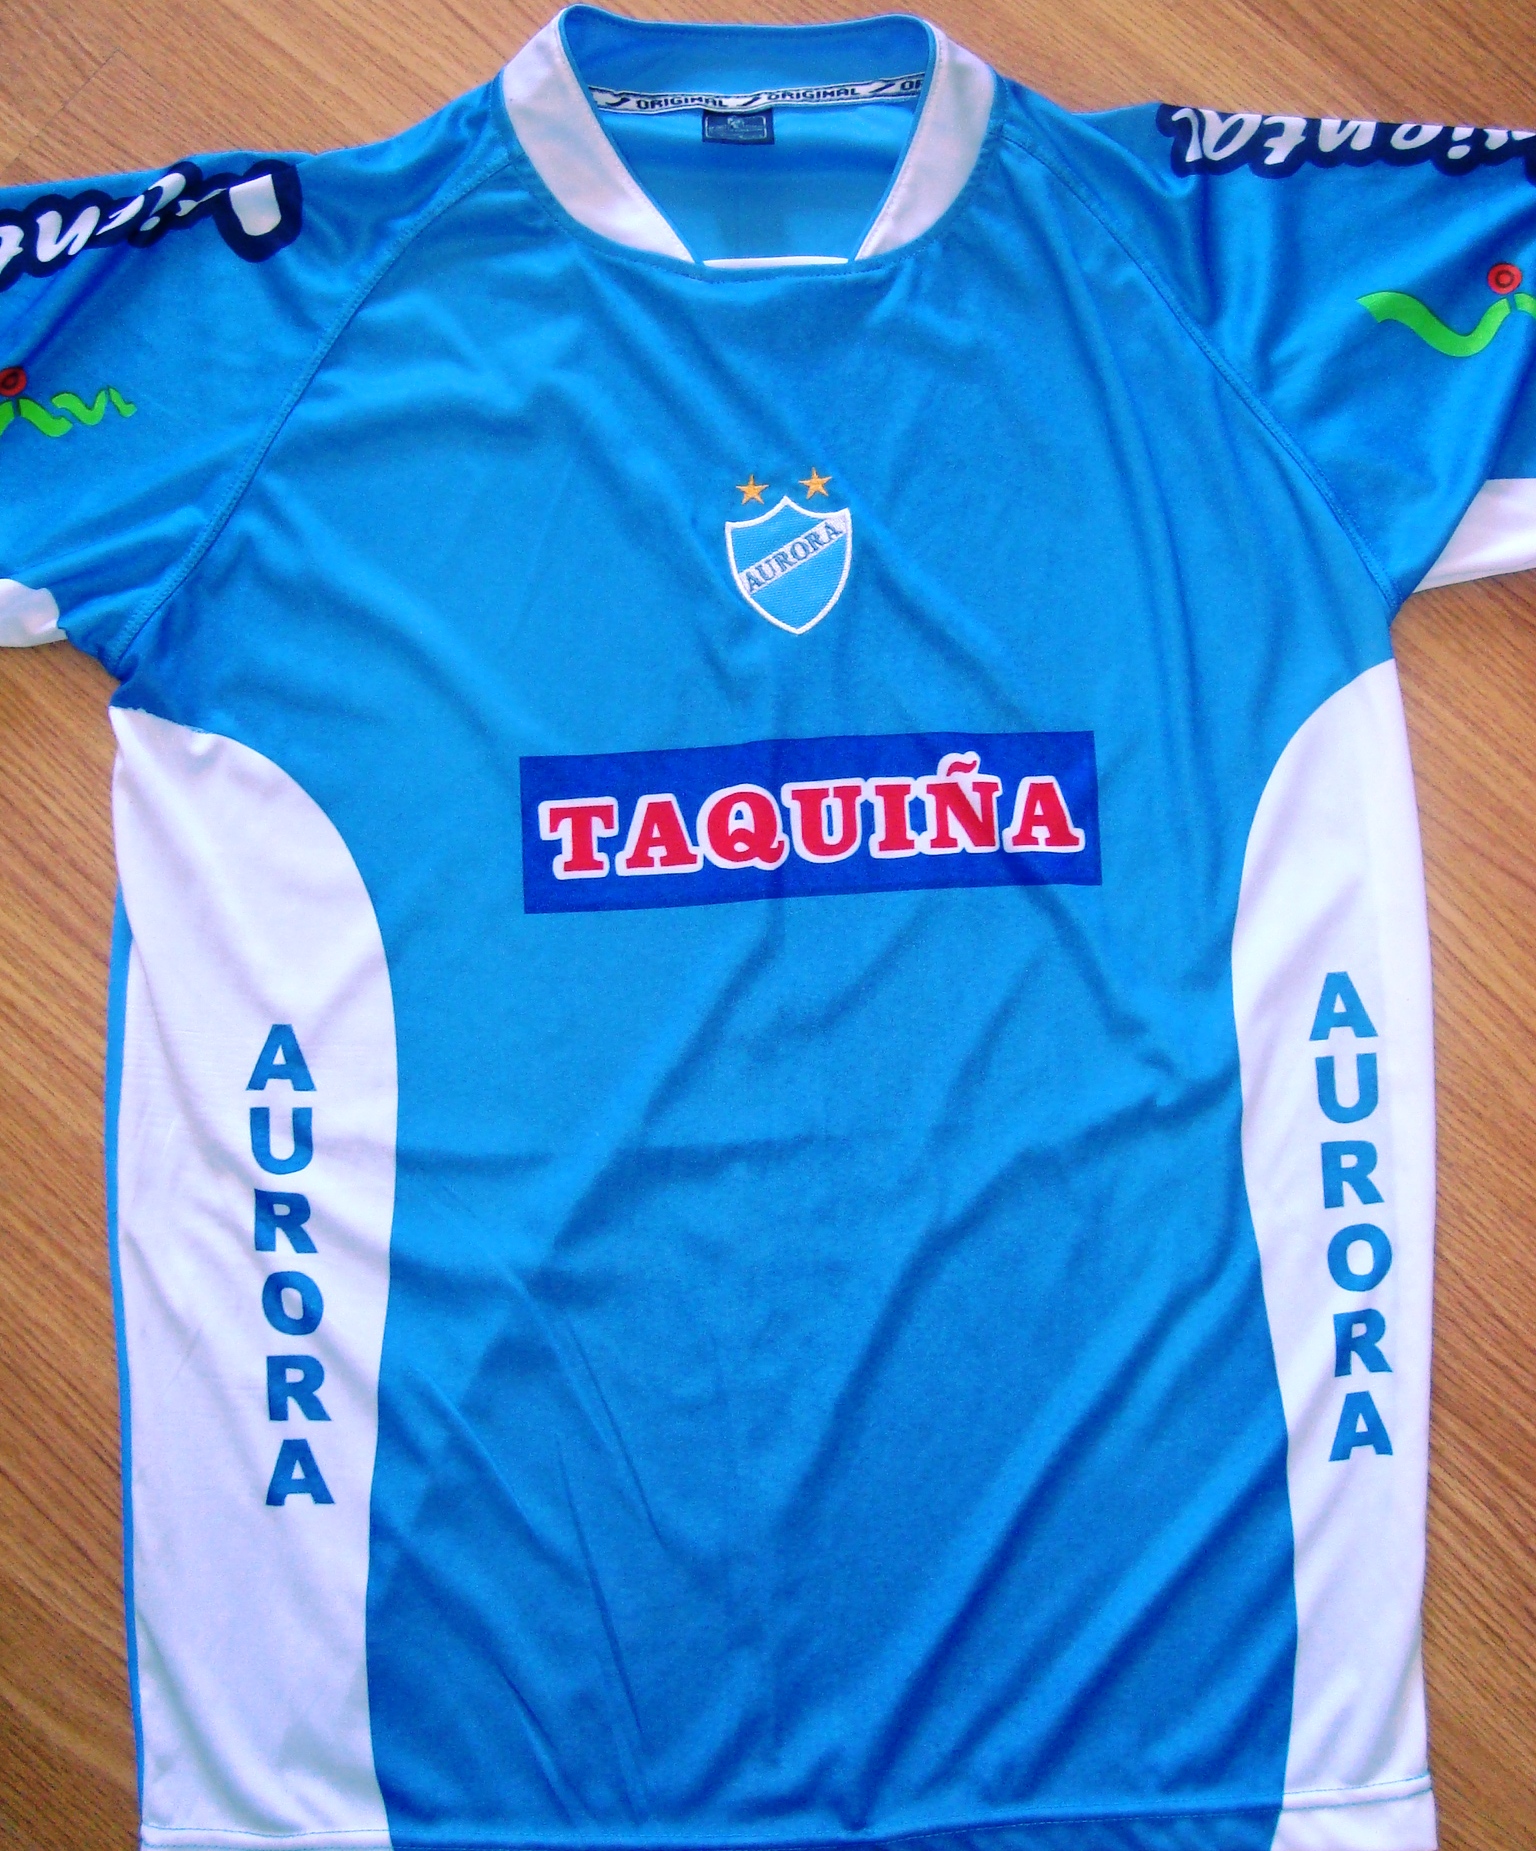 64- Camisa do Club Aurora